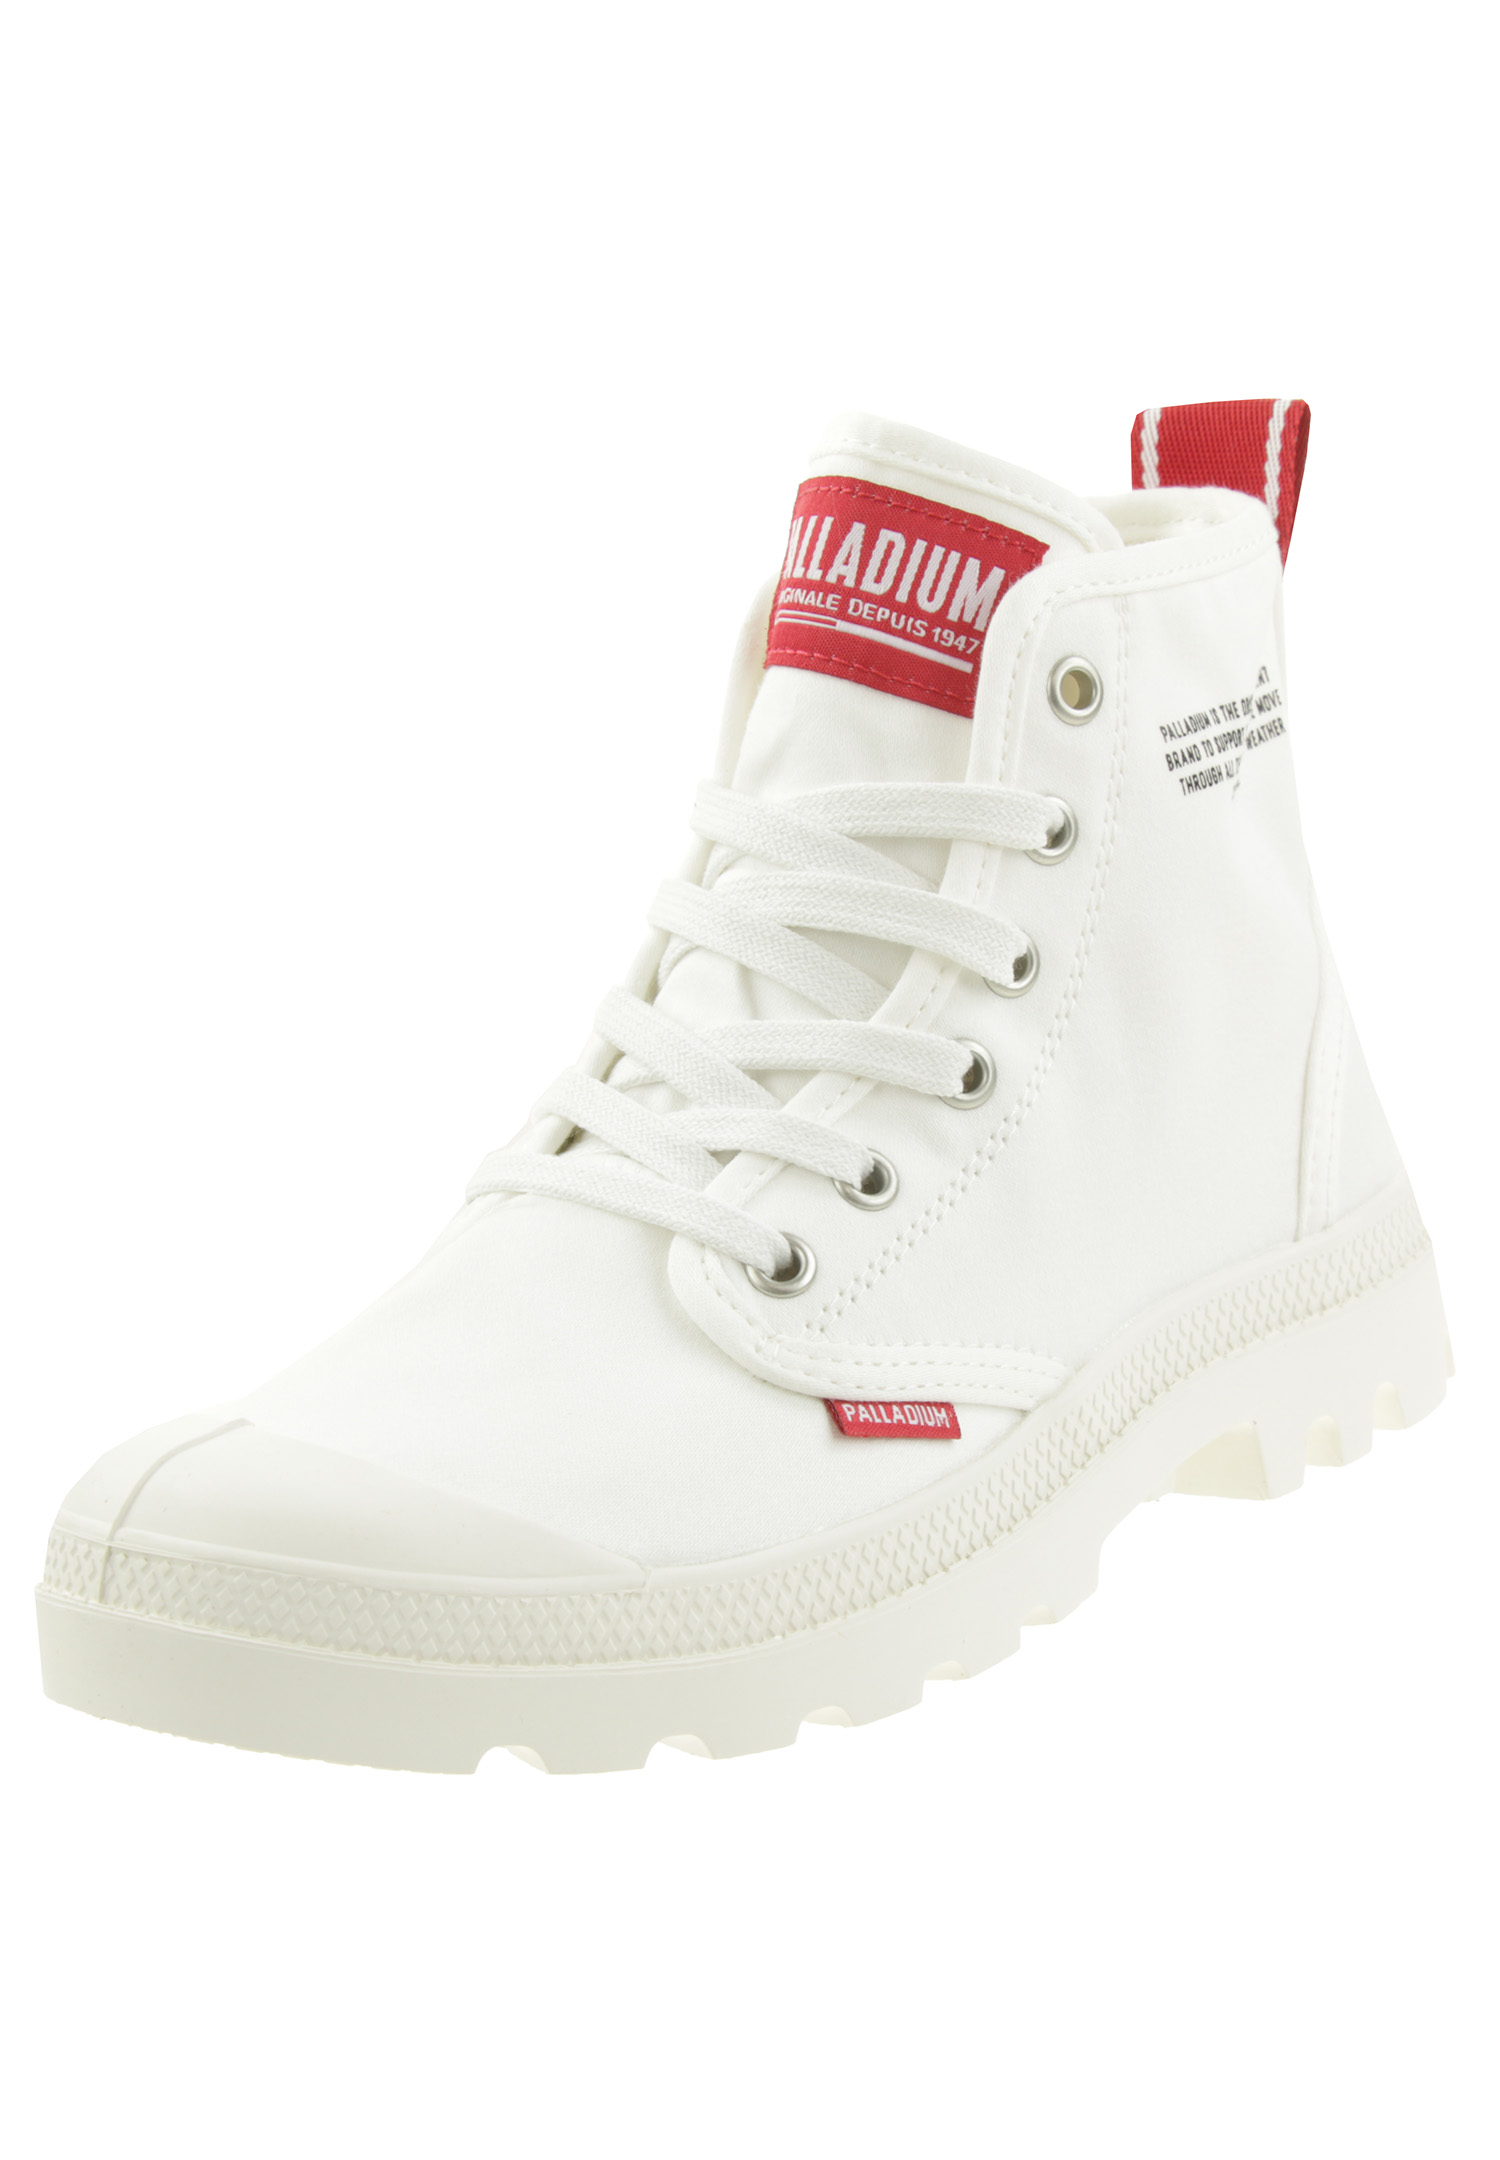 Palladium Unisex-Erwachsene Hi Du C U Hohe Sneaker, Weiß (Star White L47), 44 EU